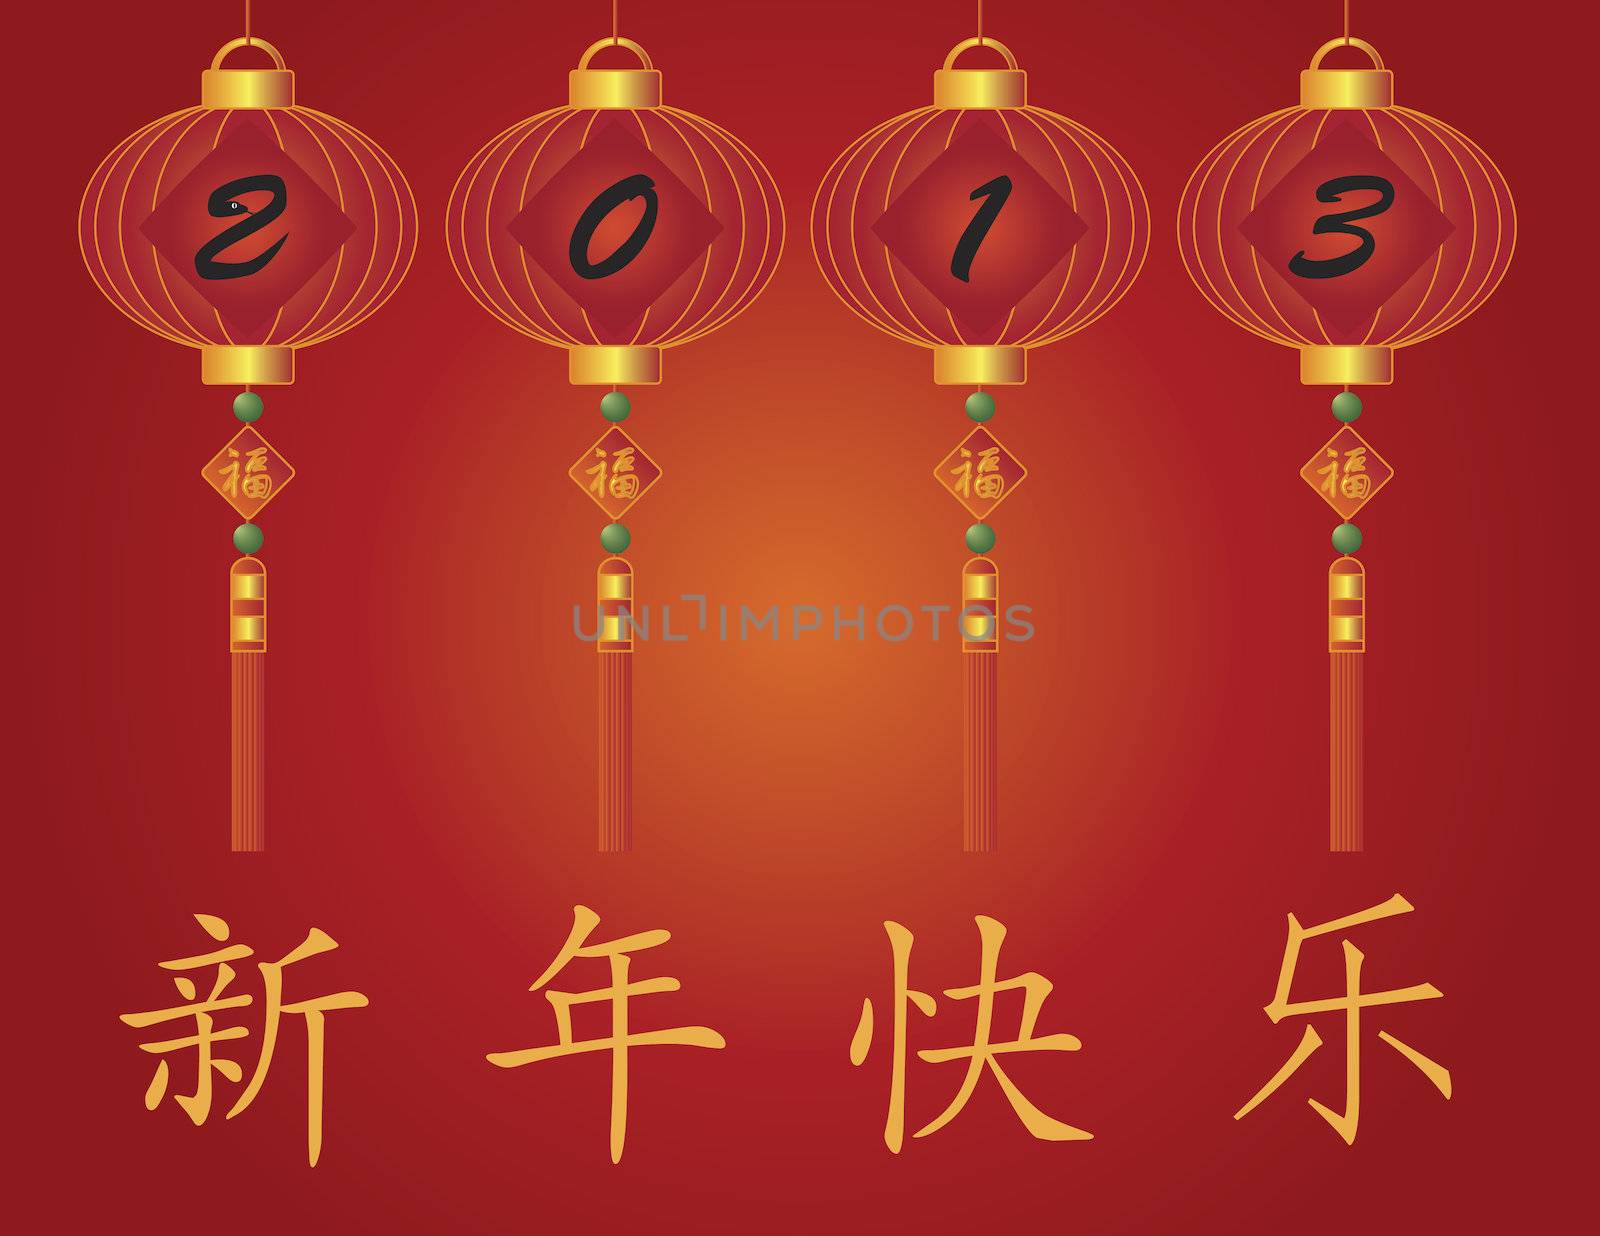 2013 Chinese New Year Lanterns Illustration by jpldesigns